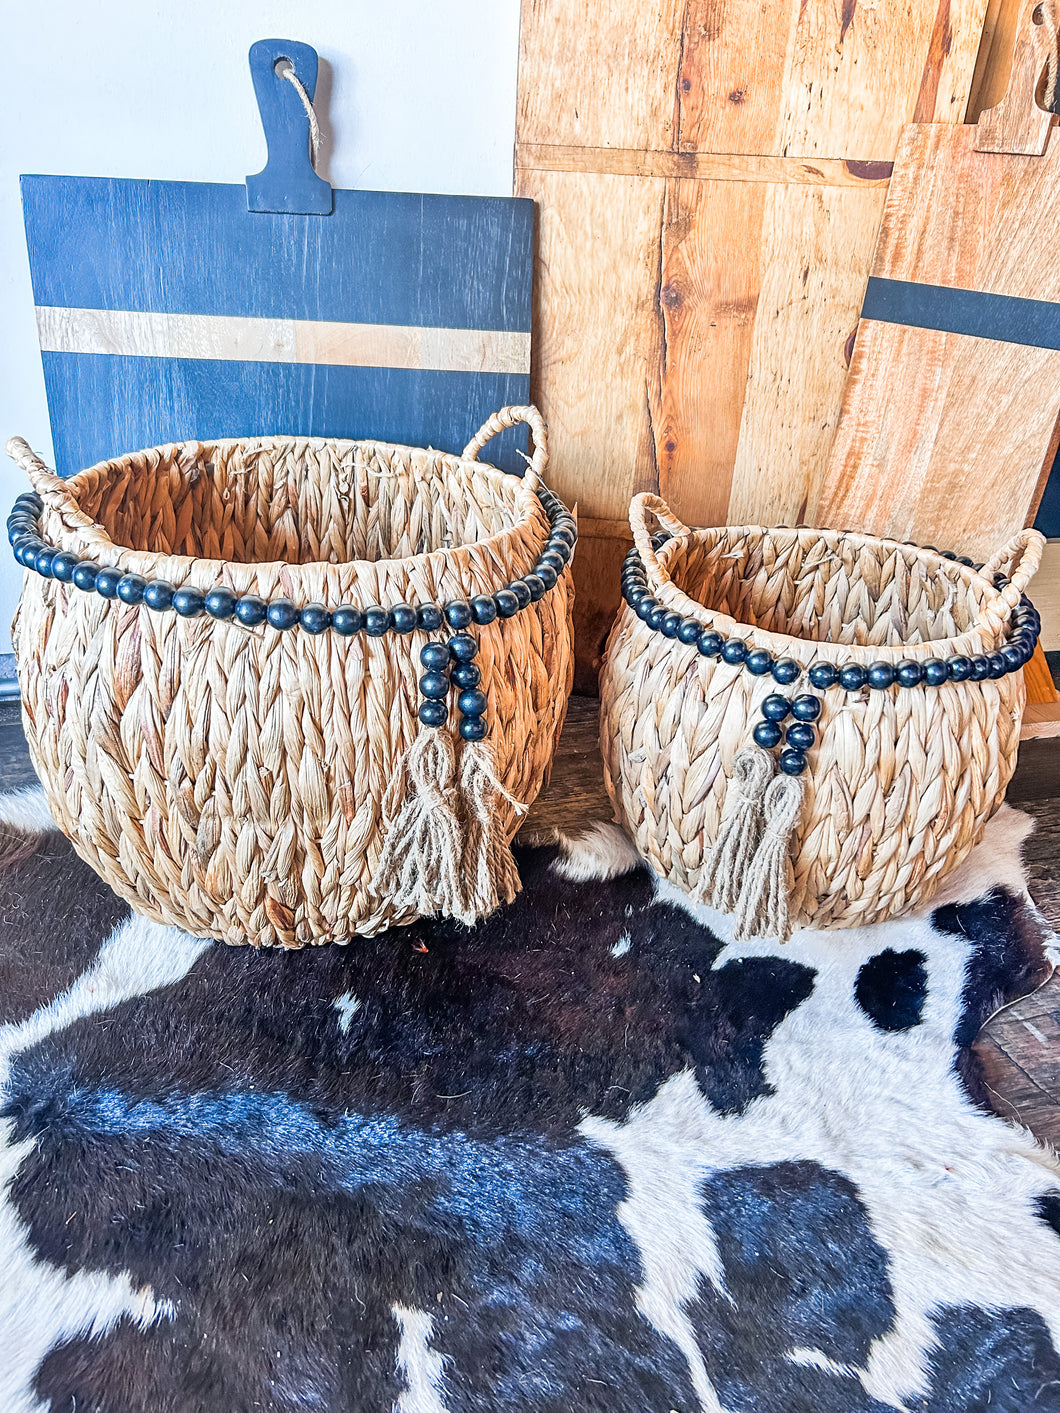 Black bead woven baskets